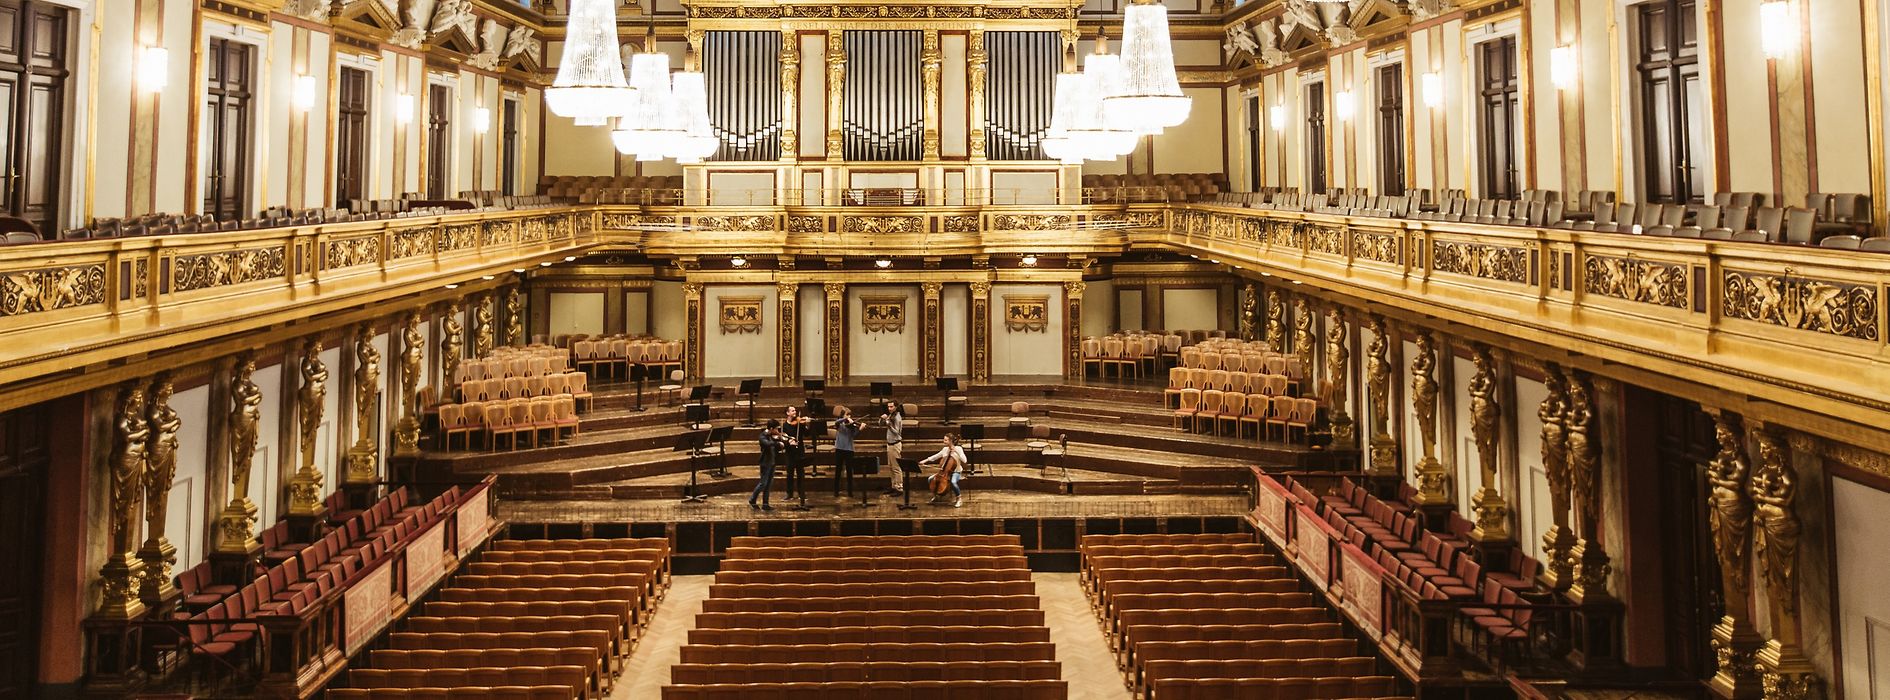 Musikverein Vienna, Большой зал (Золотой зал)